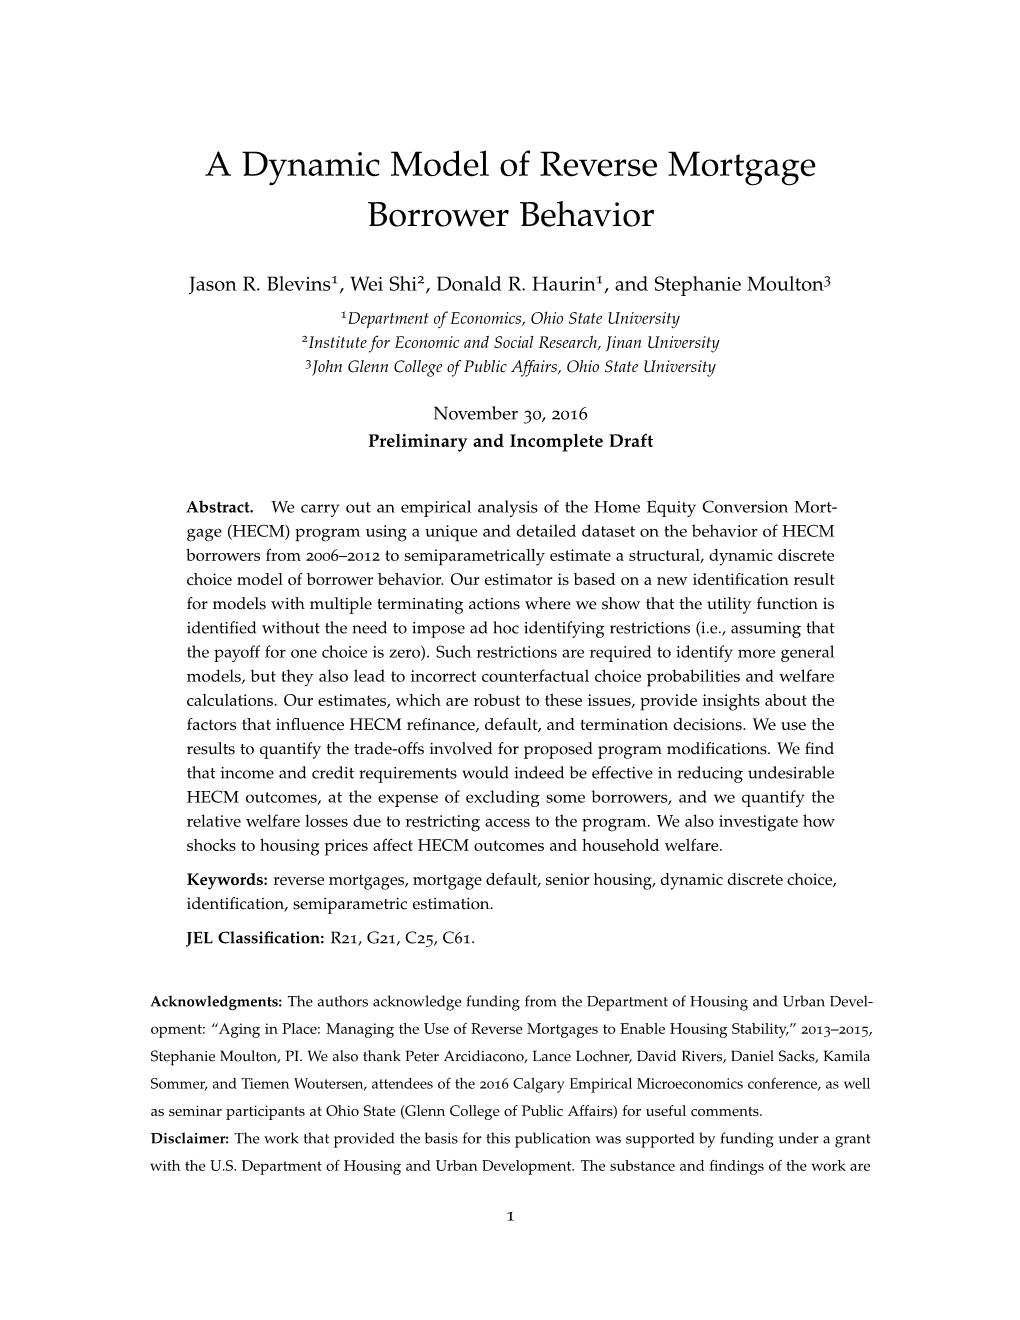 A Dynamic Model of Reverse Mortgage Borrower Behavior